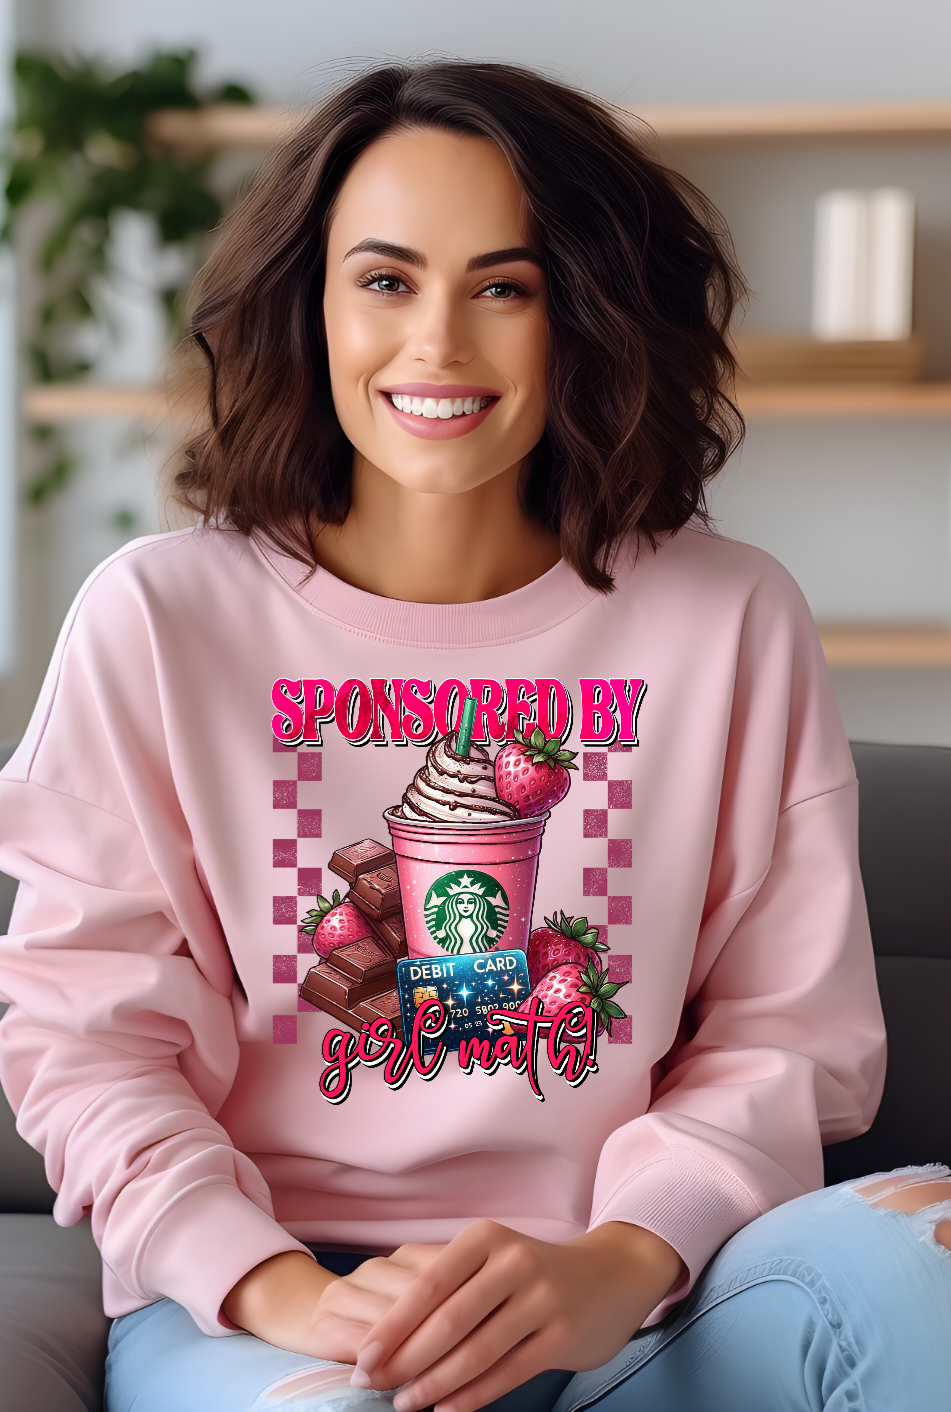 Sponsored By Girl Math Shirt